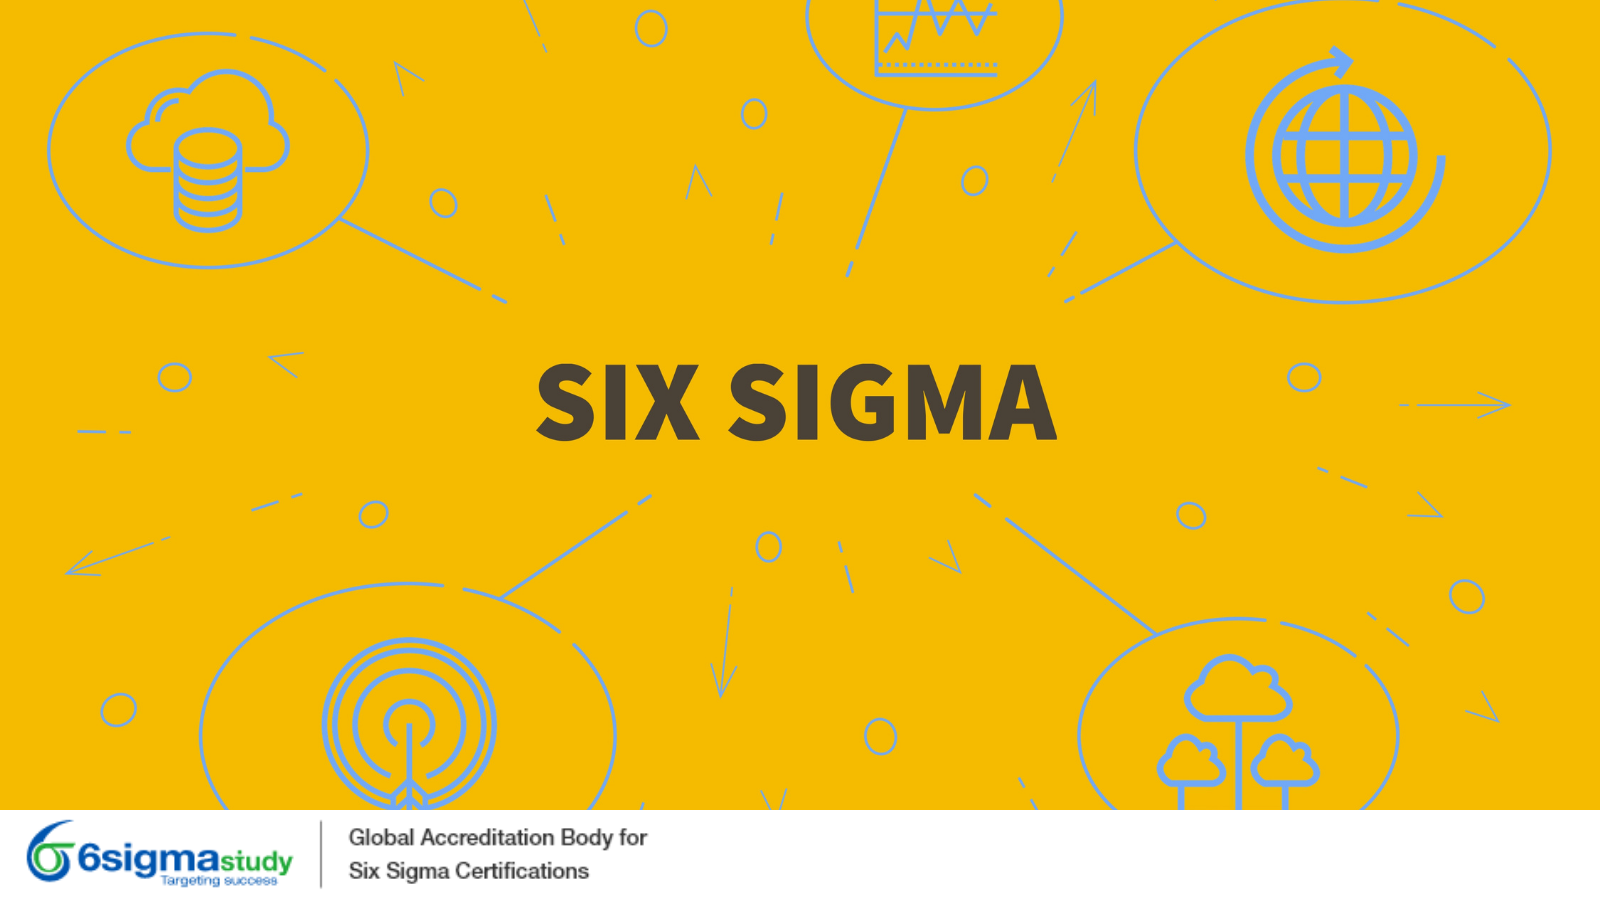 Defining Six Sigma